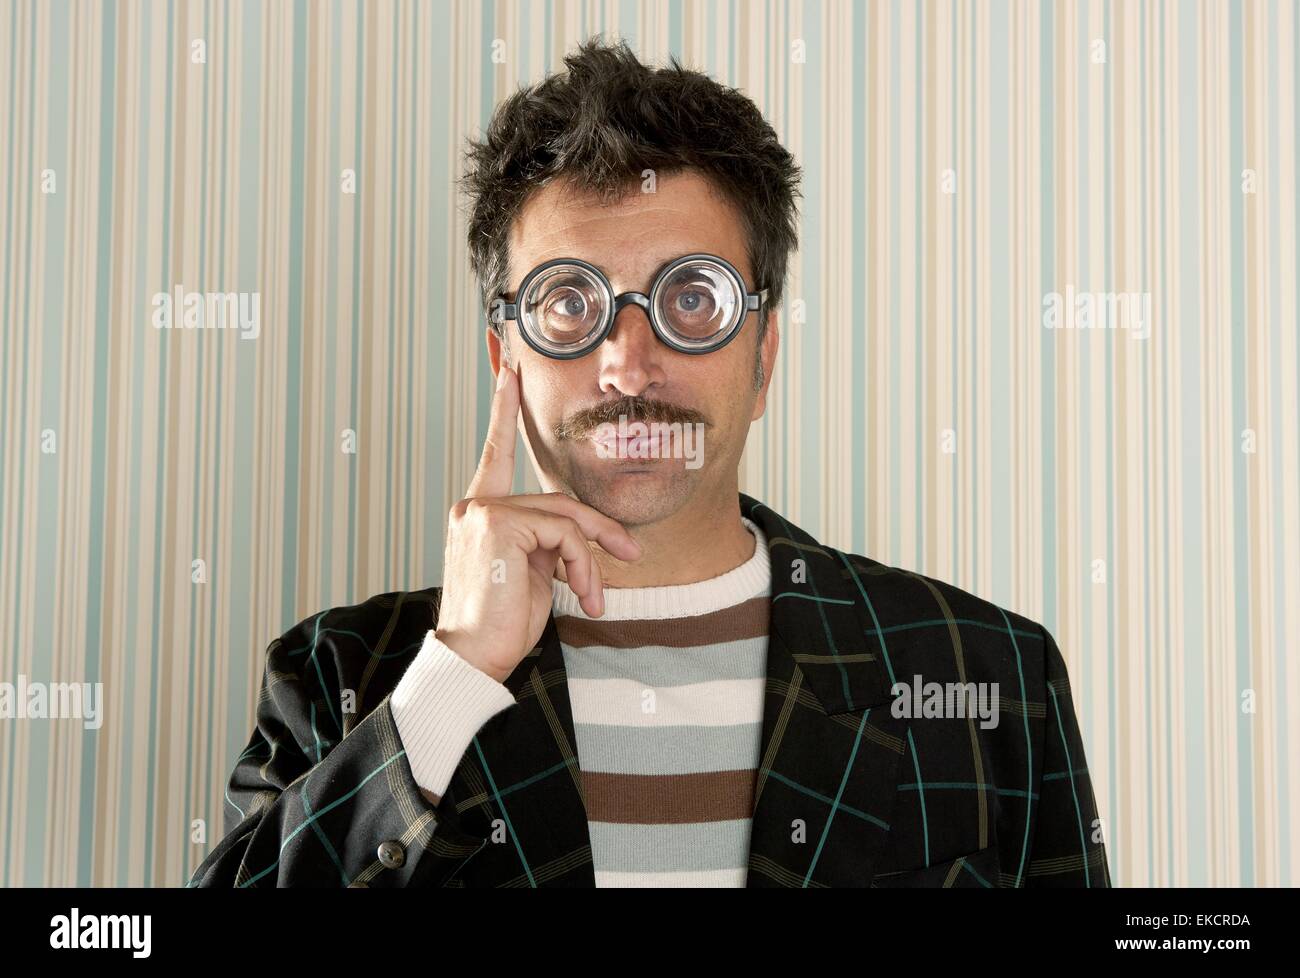 crazy nerd man myopic thinking funny gesture Stock Photo